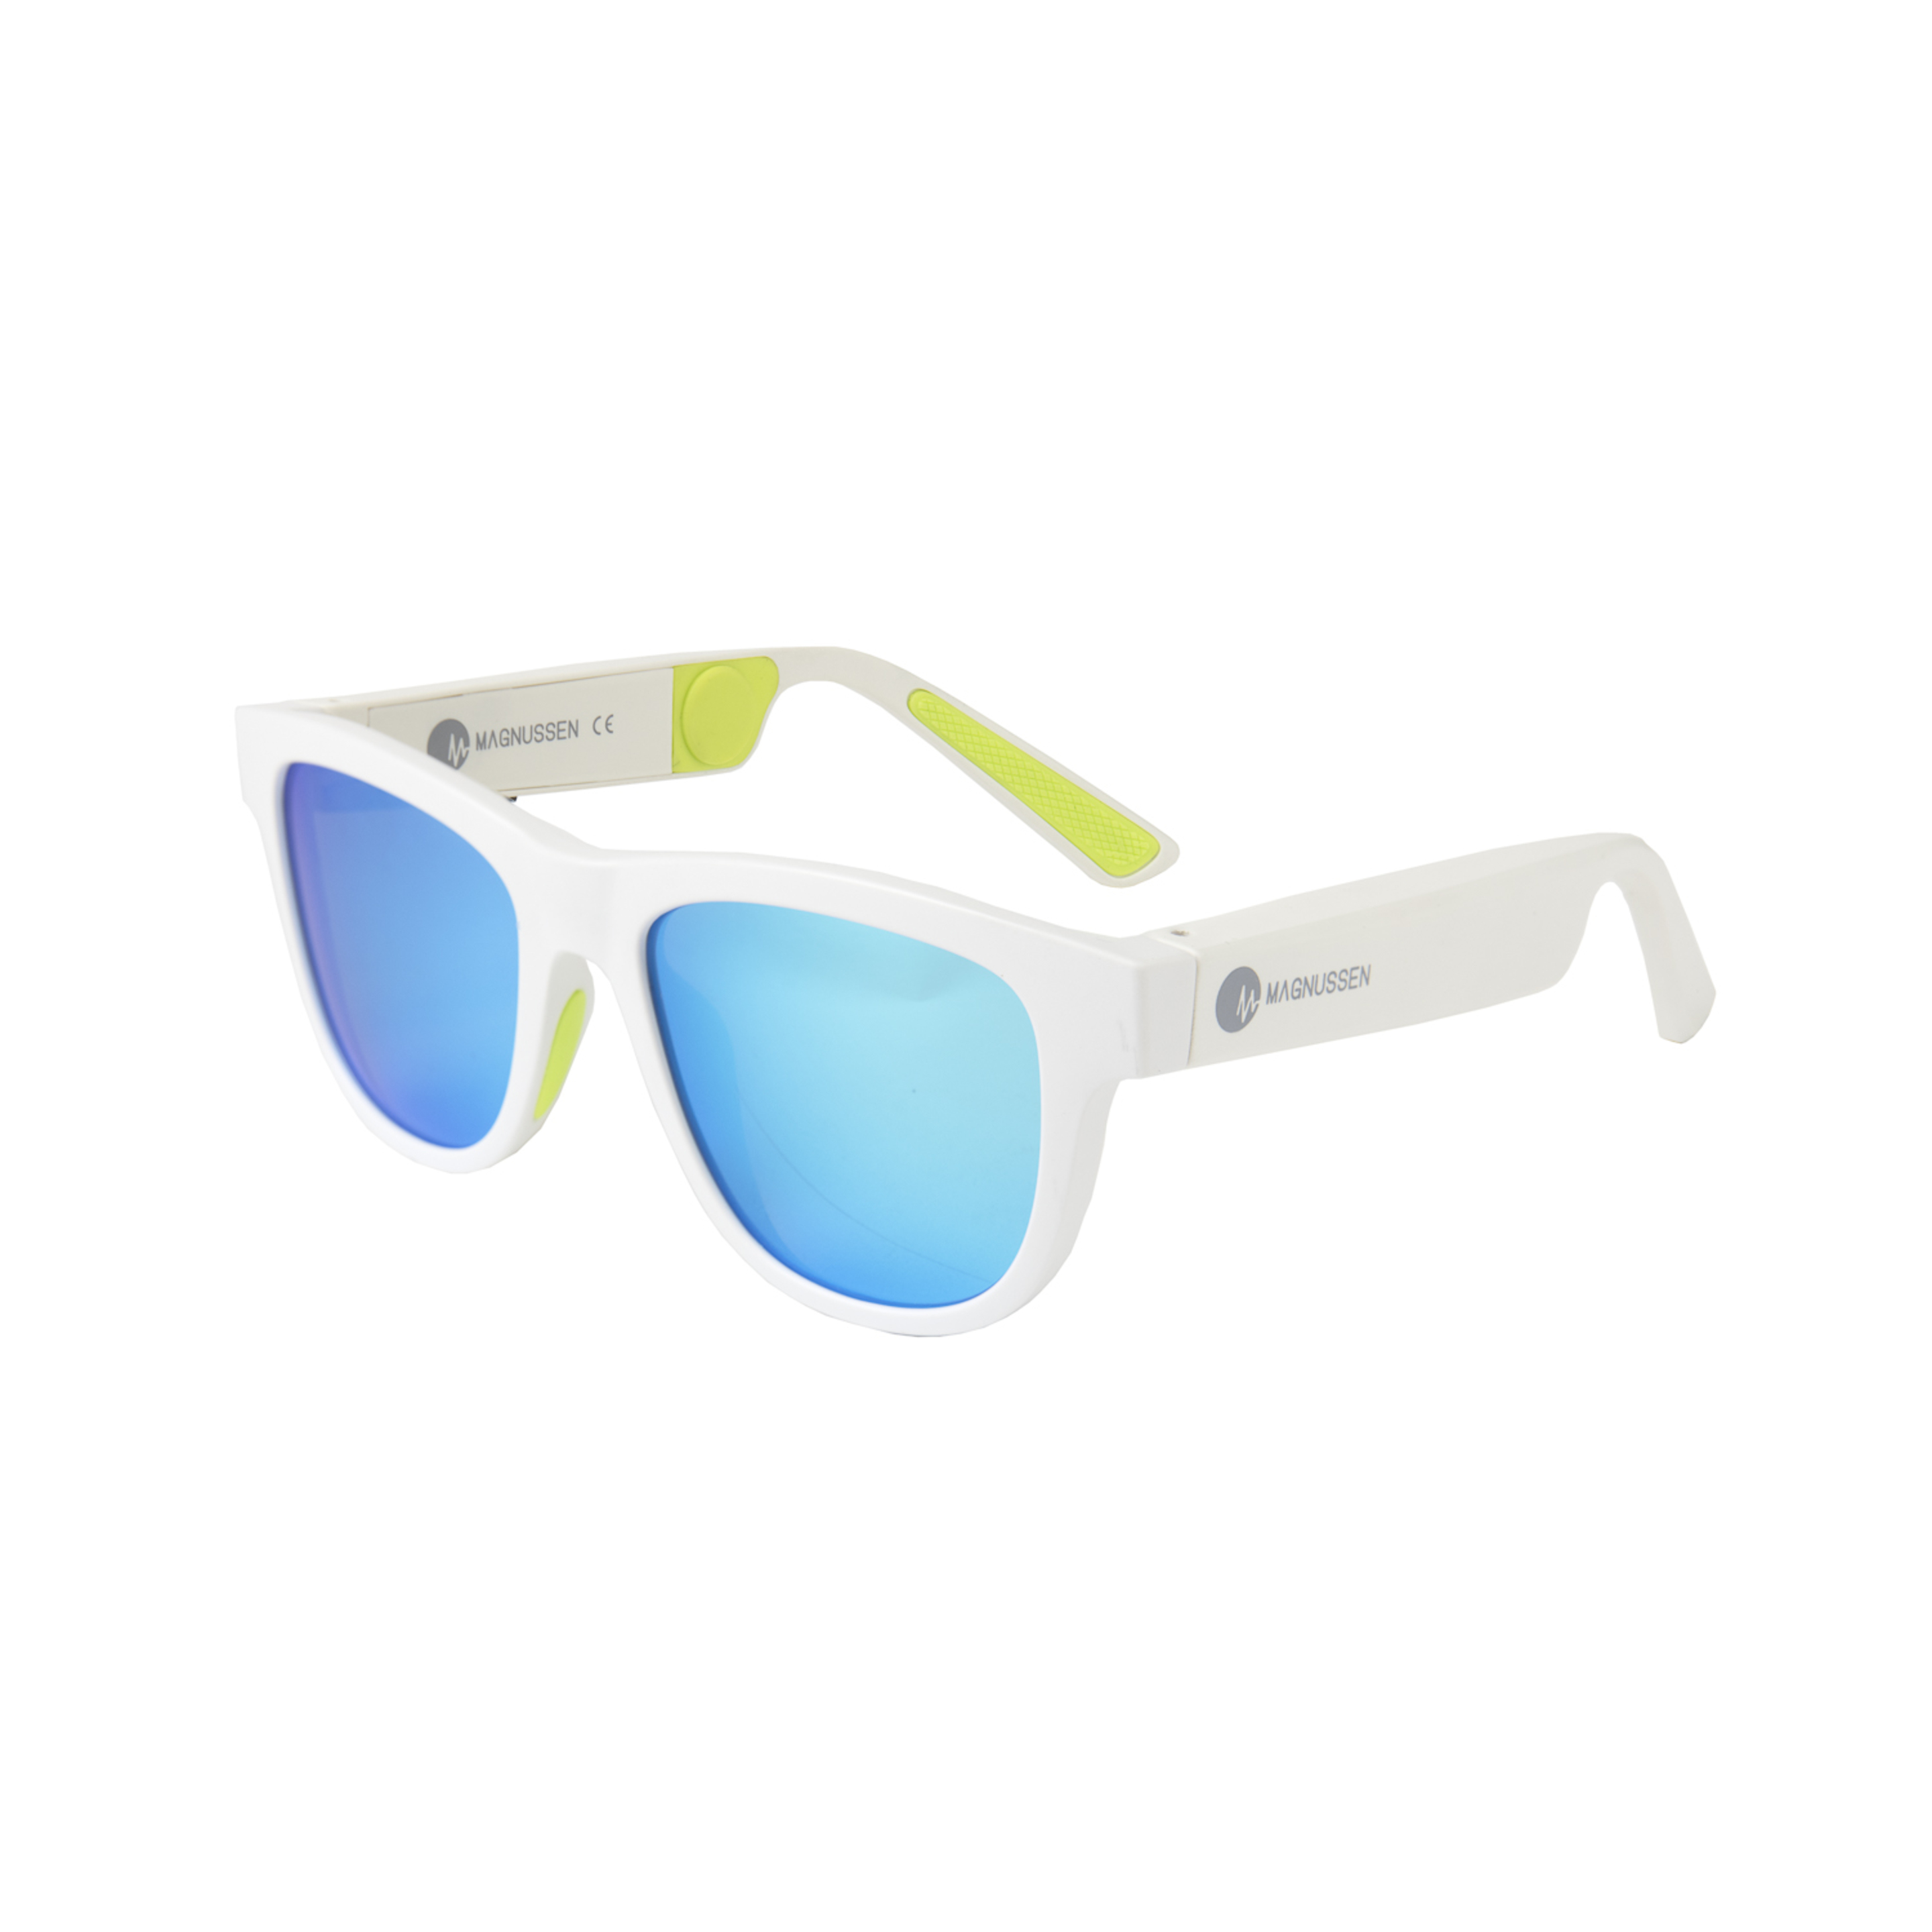 Gafas De Sol Magnussen G1 Bluetooth - blanco-azul - 